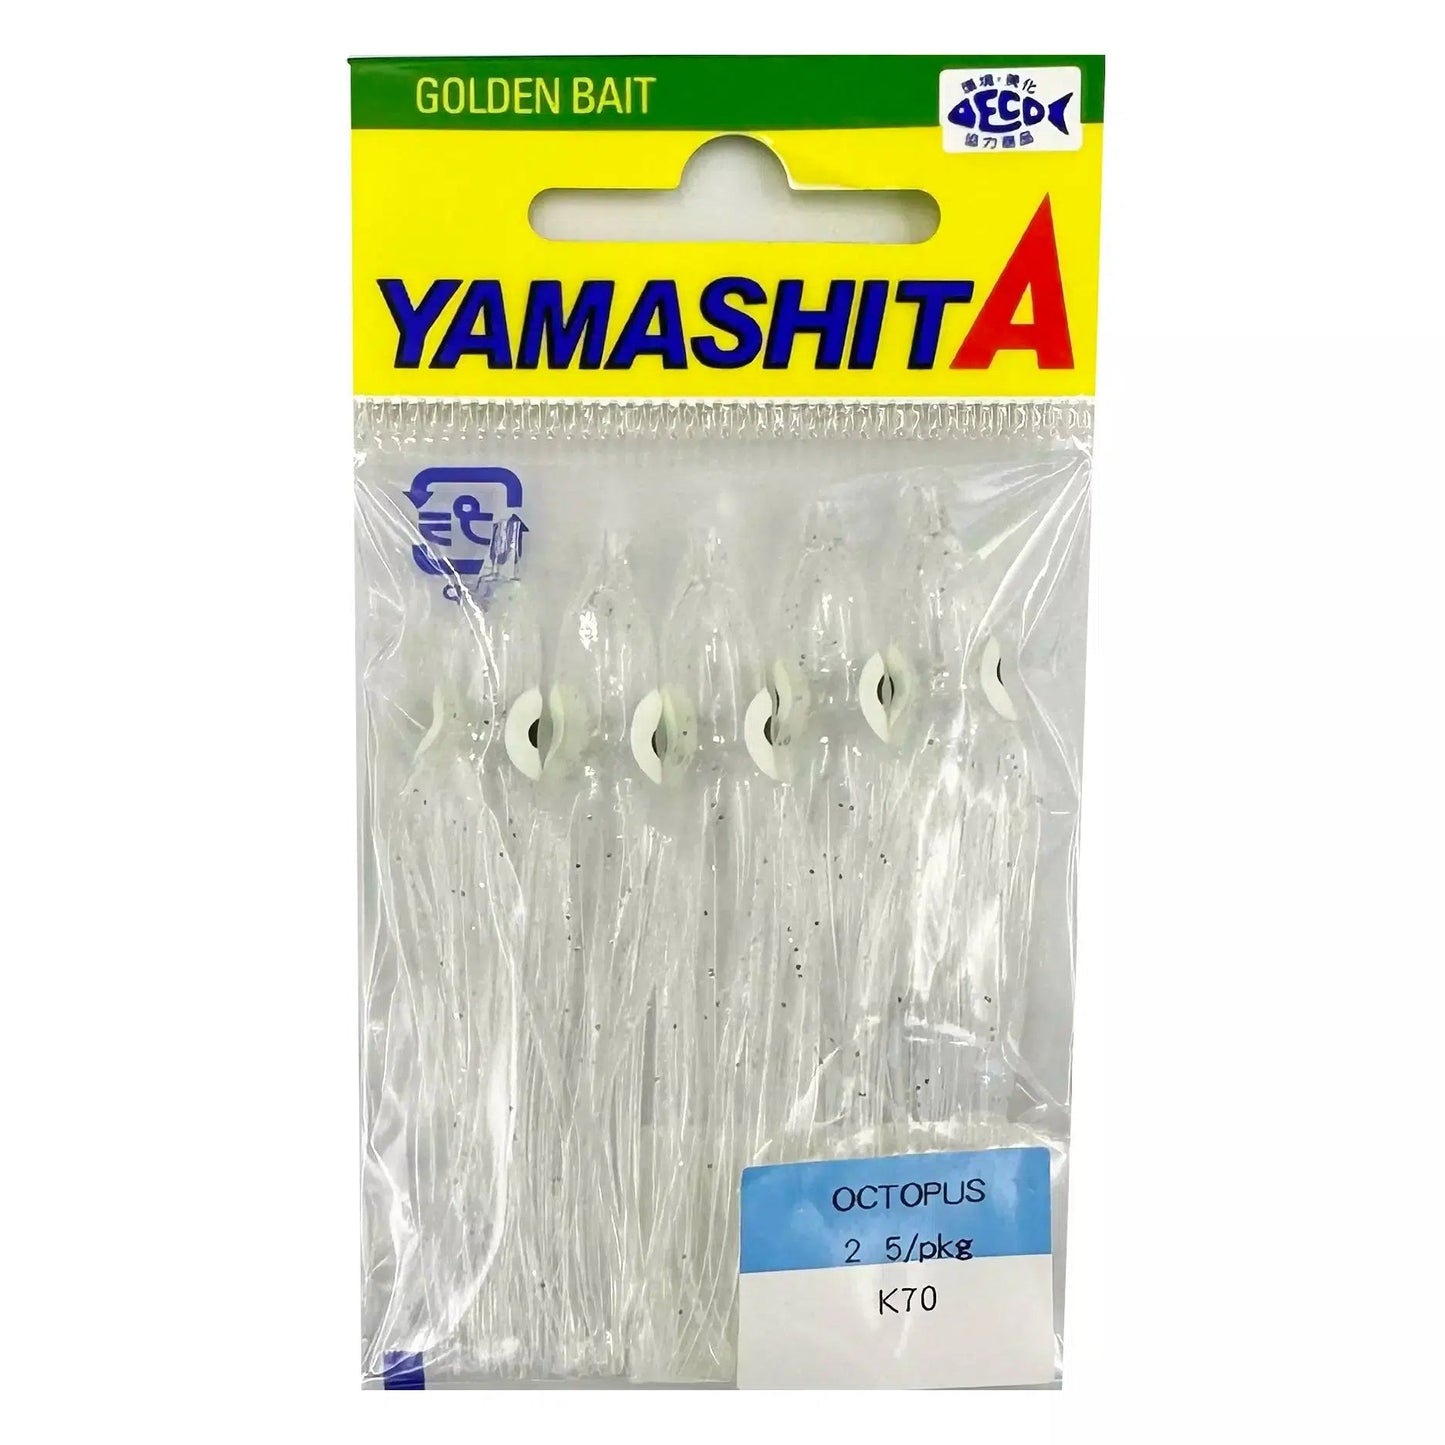 Yamashita Golden Bait Skirt (5 per pack) BB-Skirt-Yamashita-1.5-Clear-Fishing Station